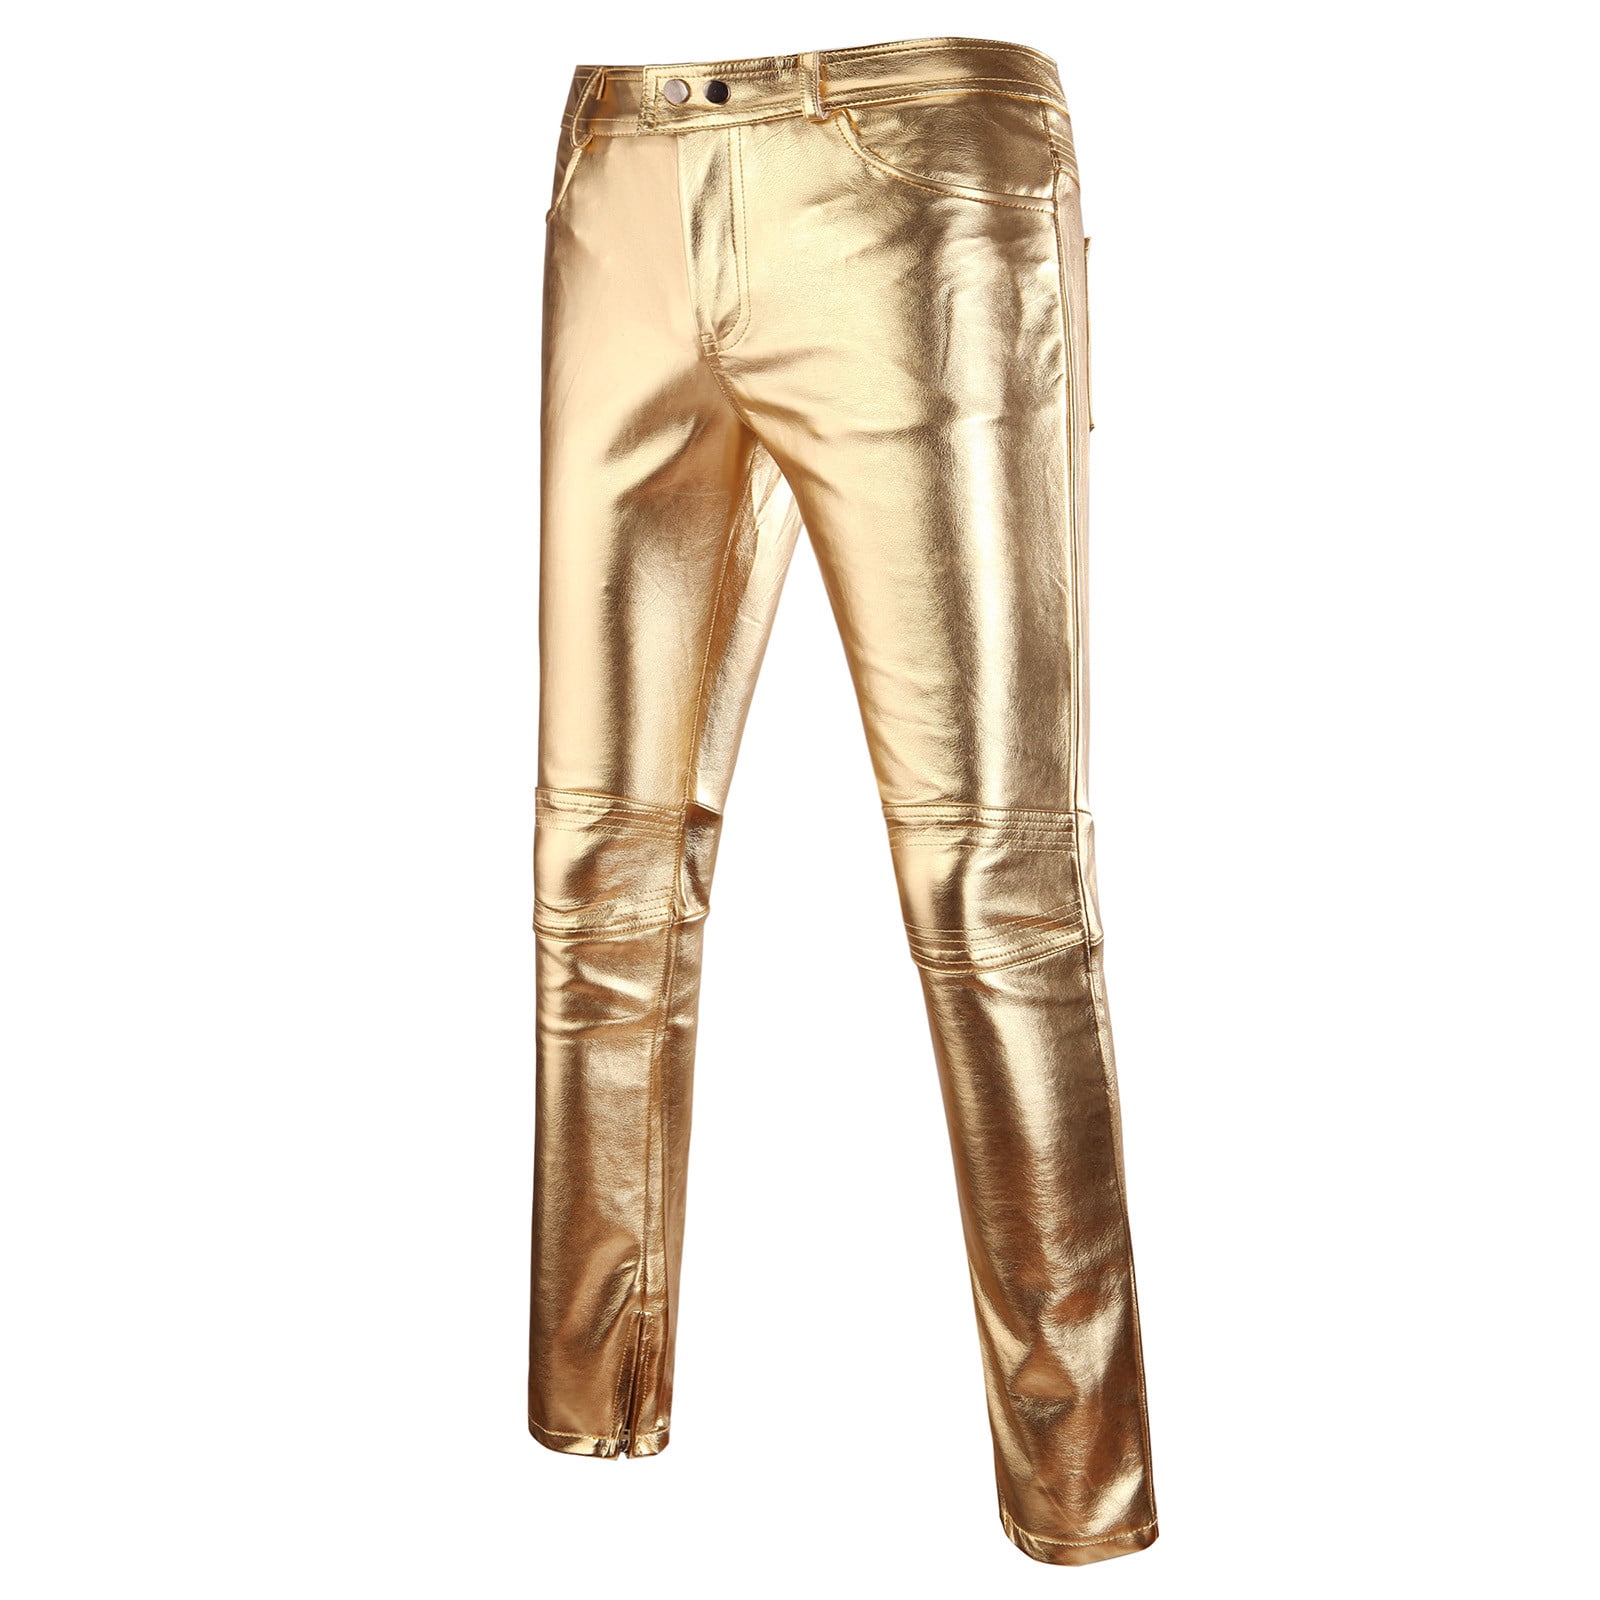 Compare Lowest Prices 80s Leggings Shiny Metallic 70s Neon Disco Pants ...